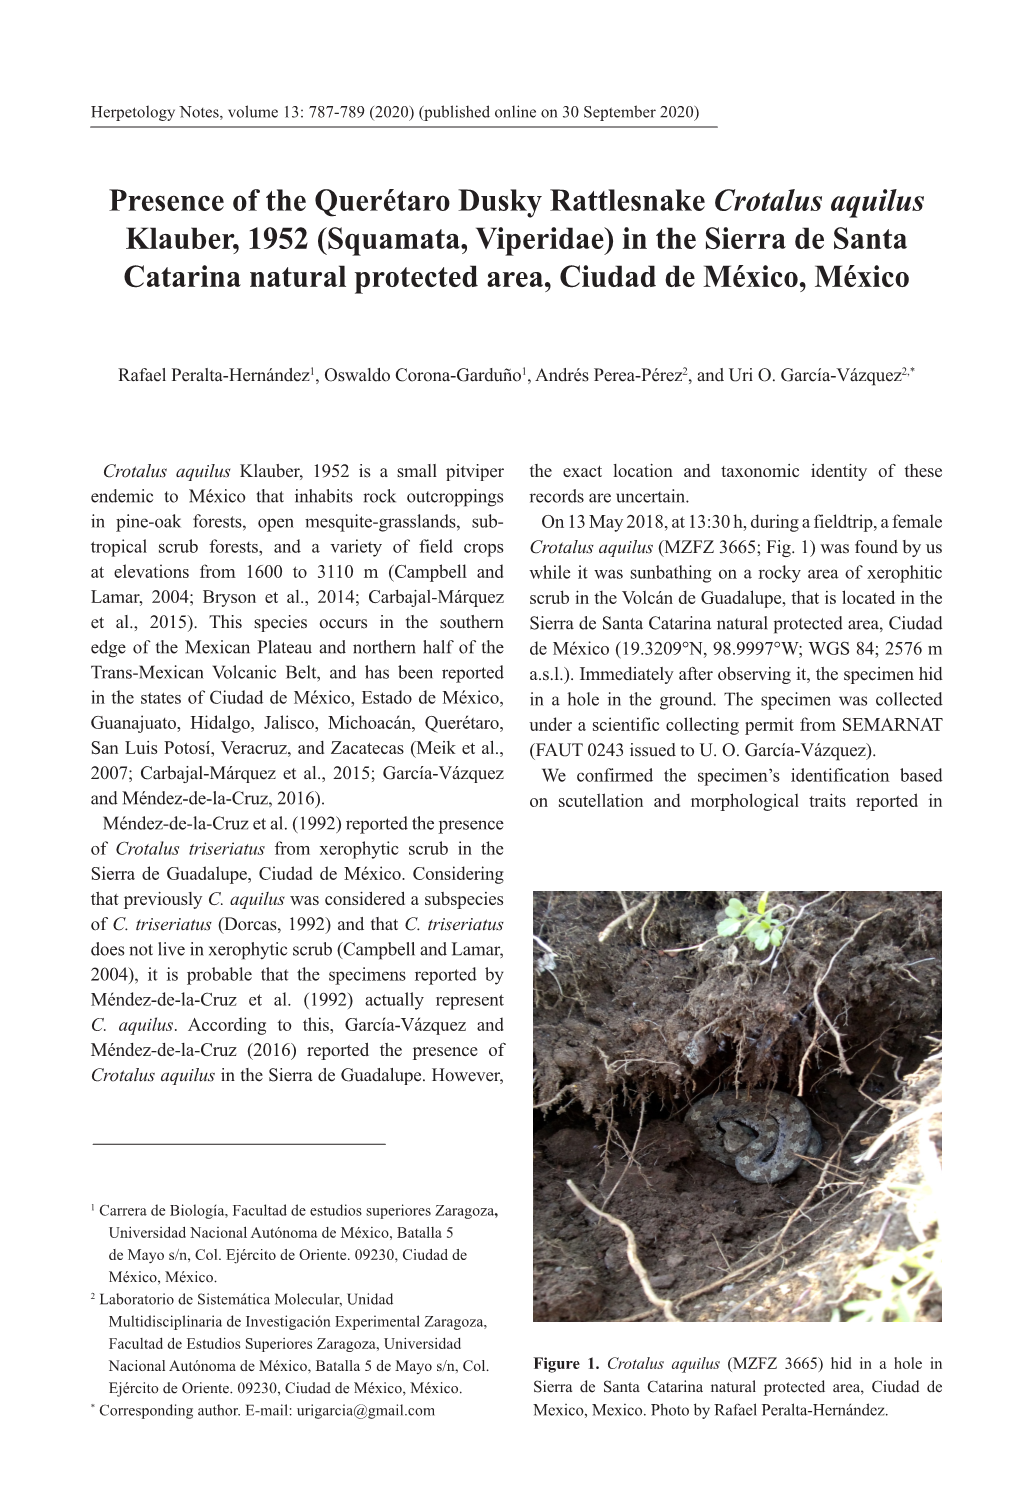 Presence of the Querétaro Dusky Rattlesnake Crotalus Aquilus